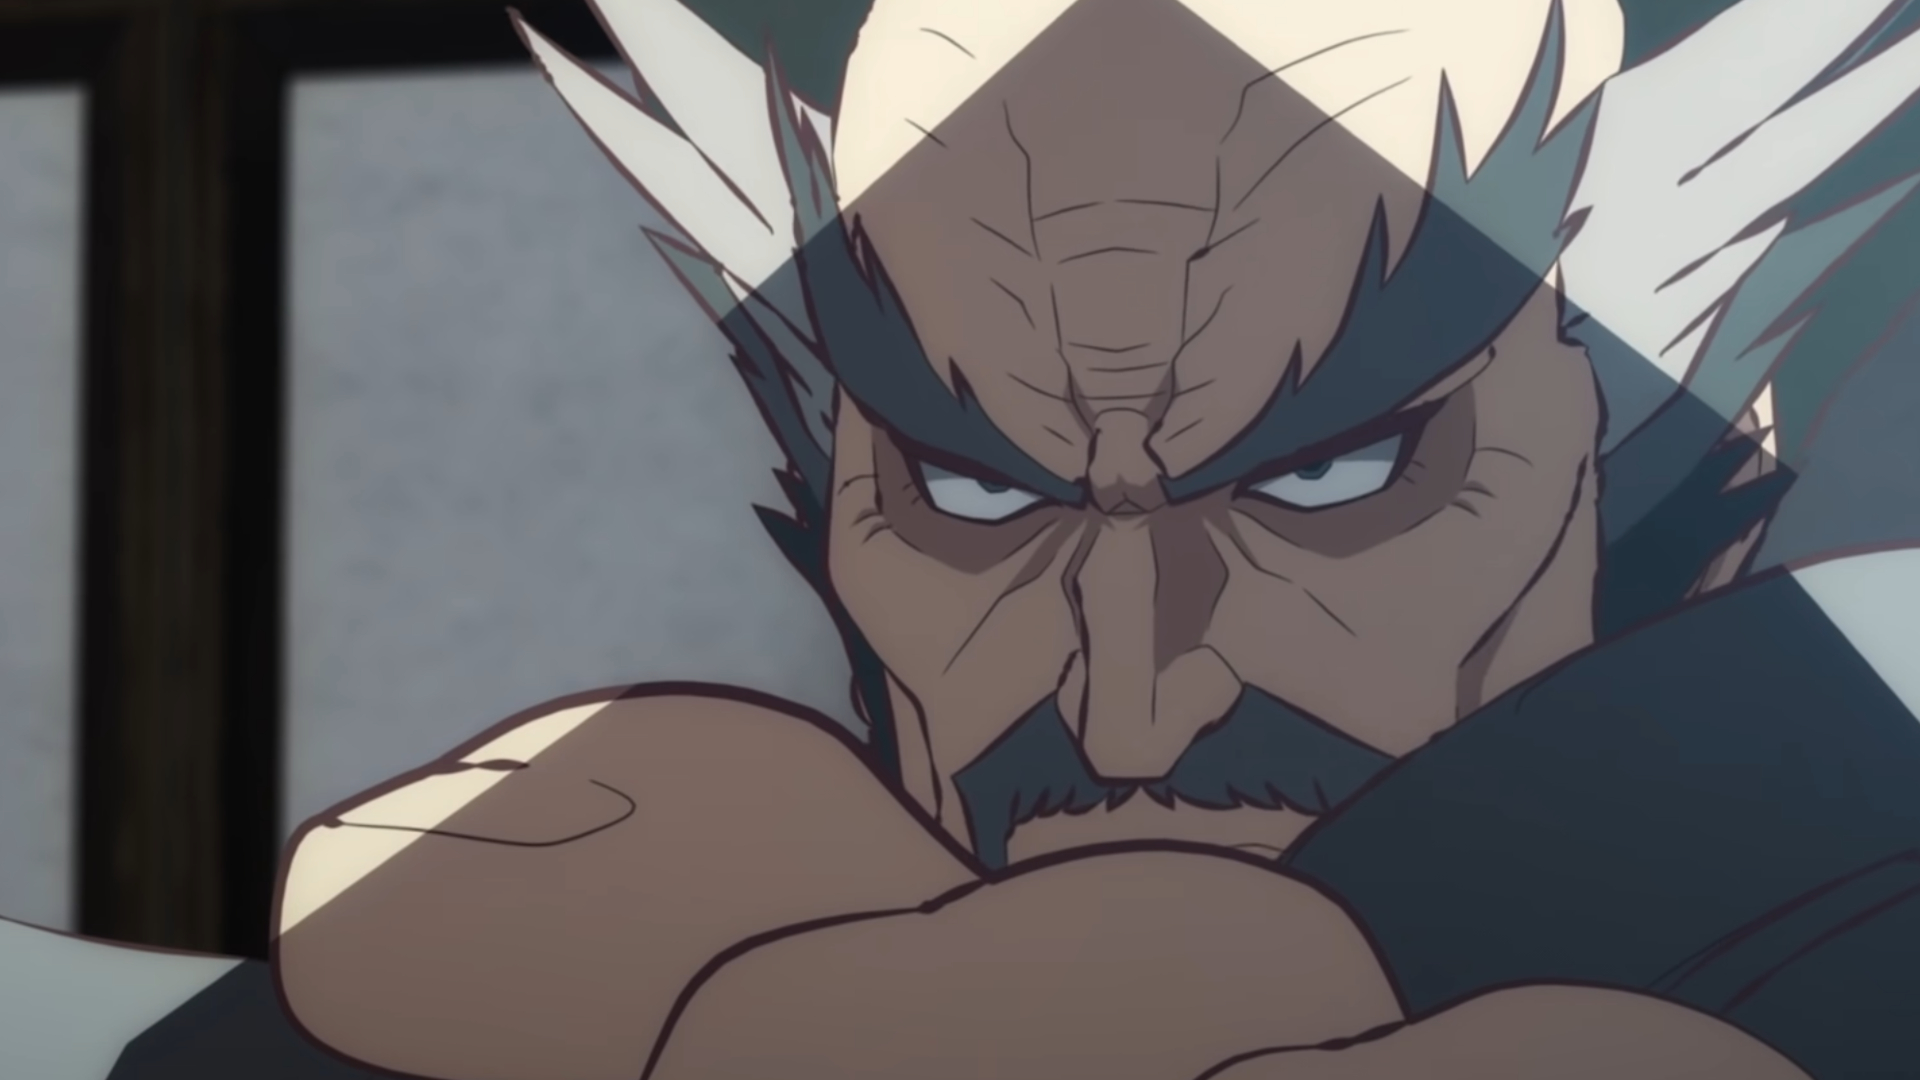  Tekken is getting a rad-looking anime adaptation on Netflix 